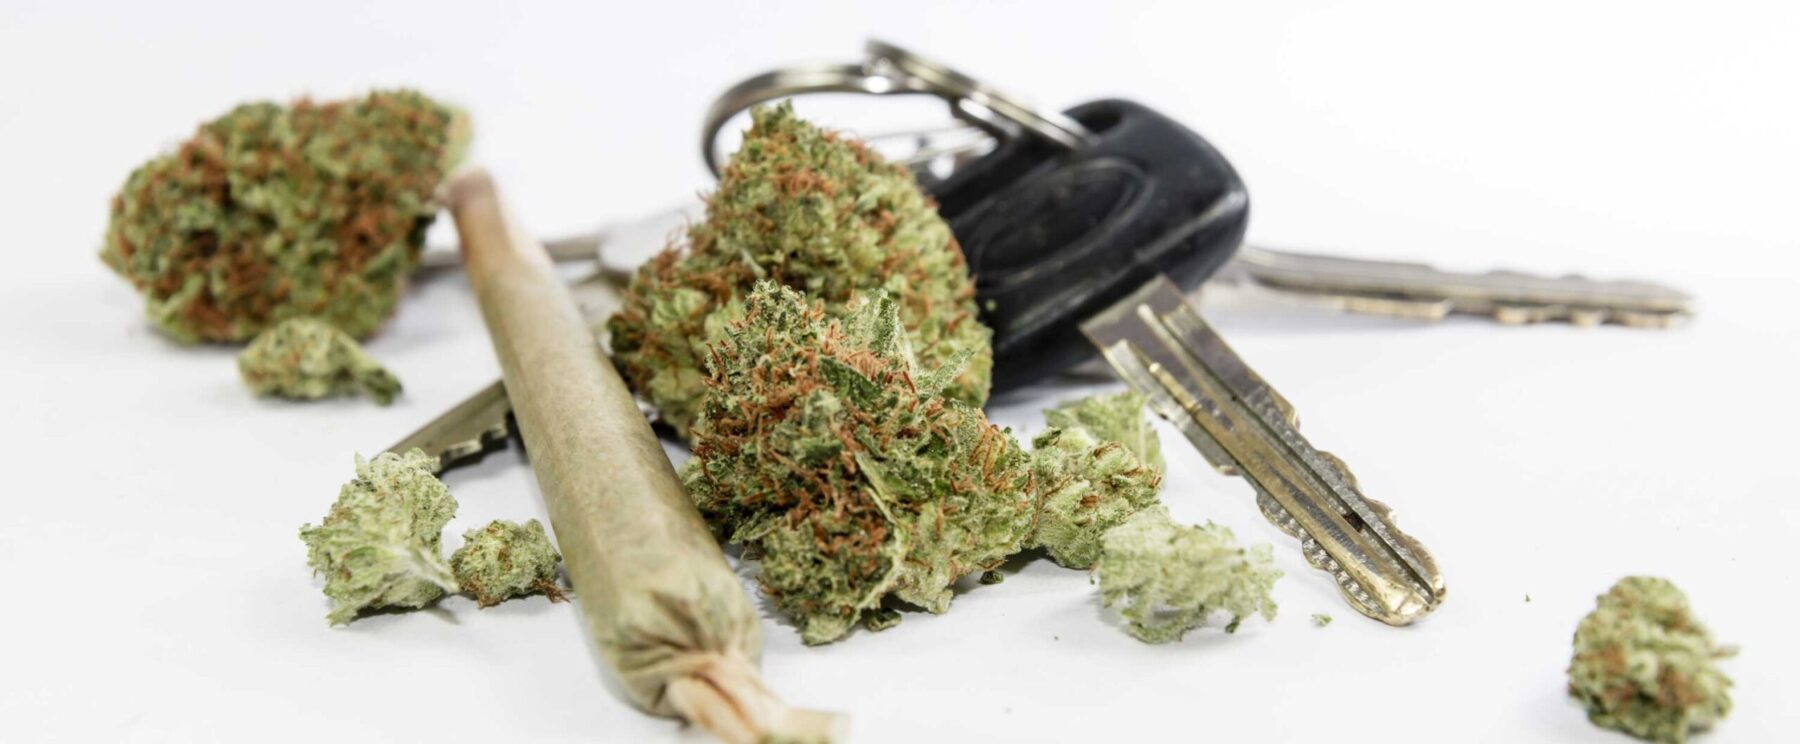 Marijuana blunt next to car keys on table